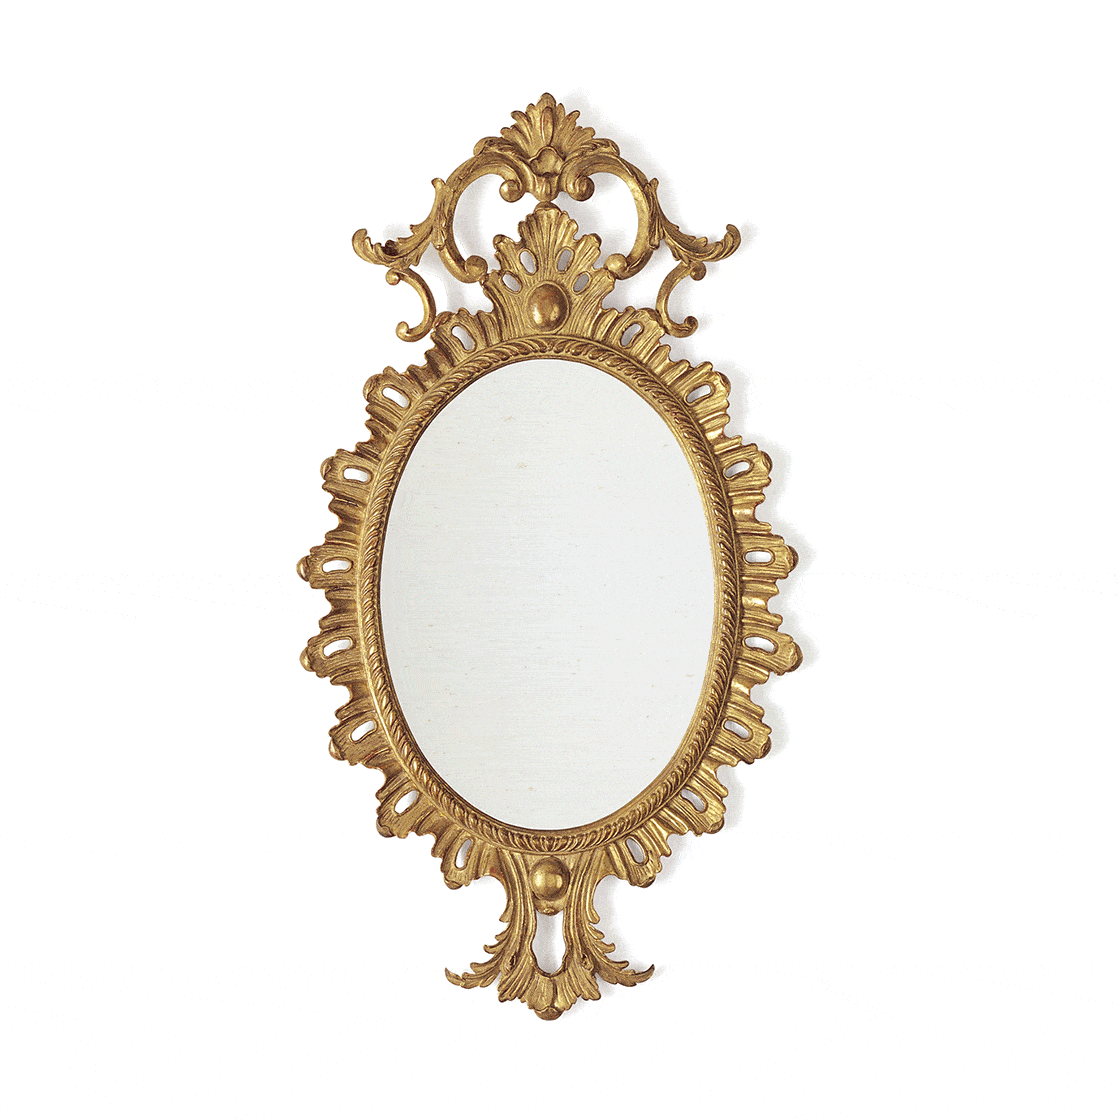 Belgrave mirror - Venice gold - Beaumont & Fletcher